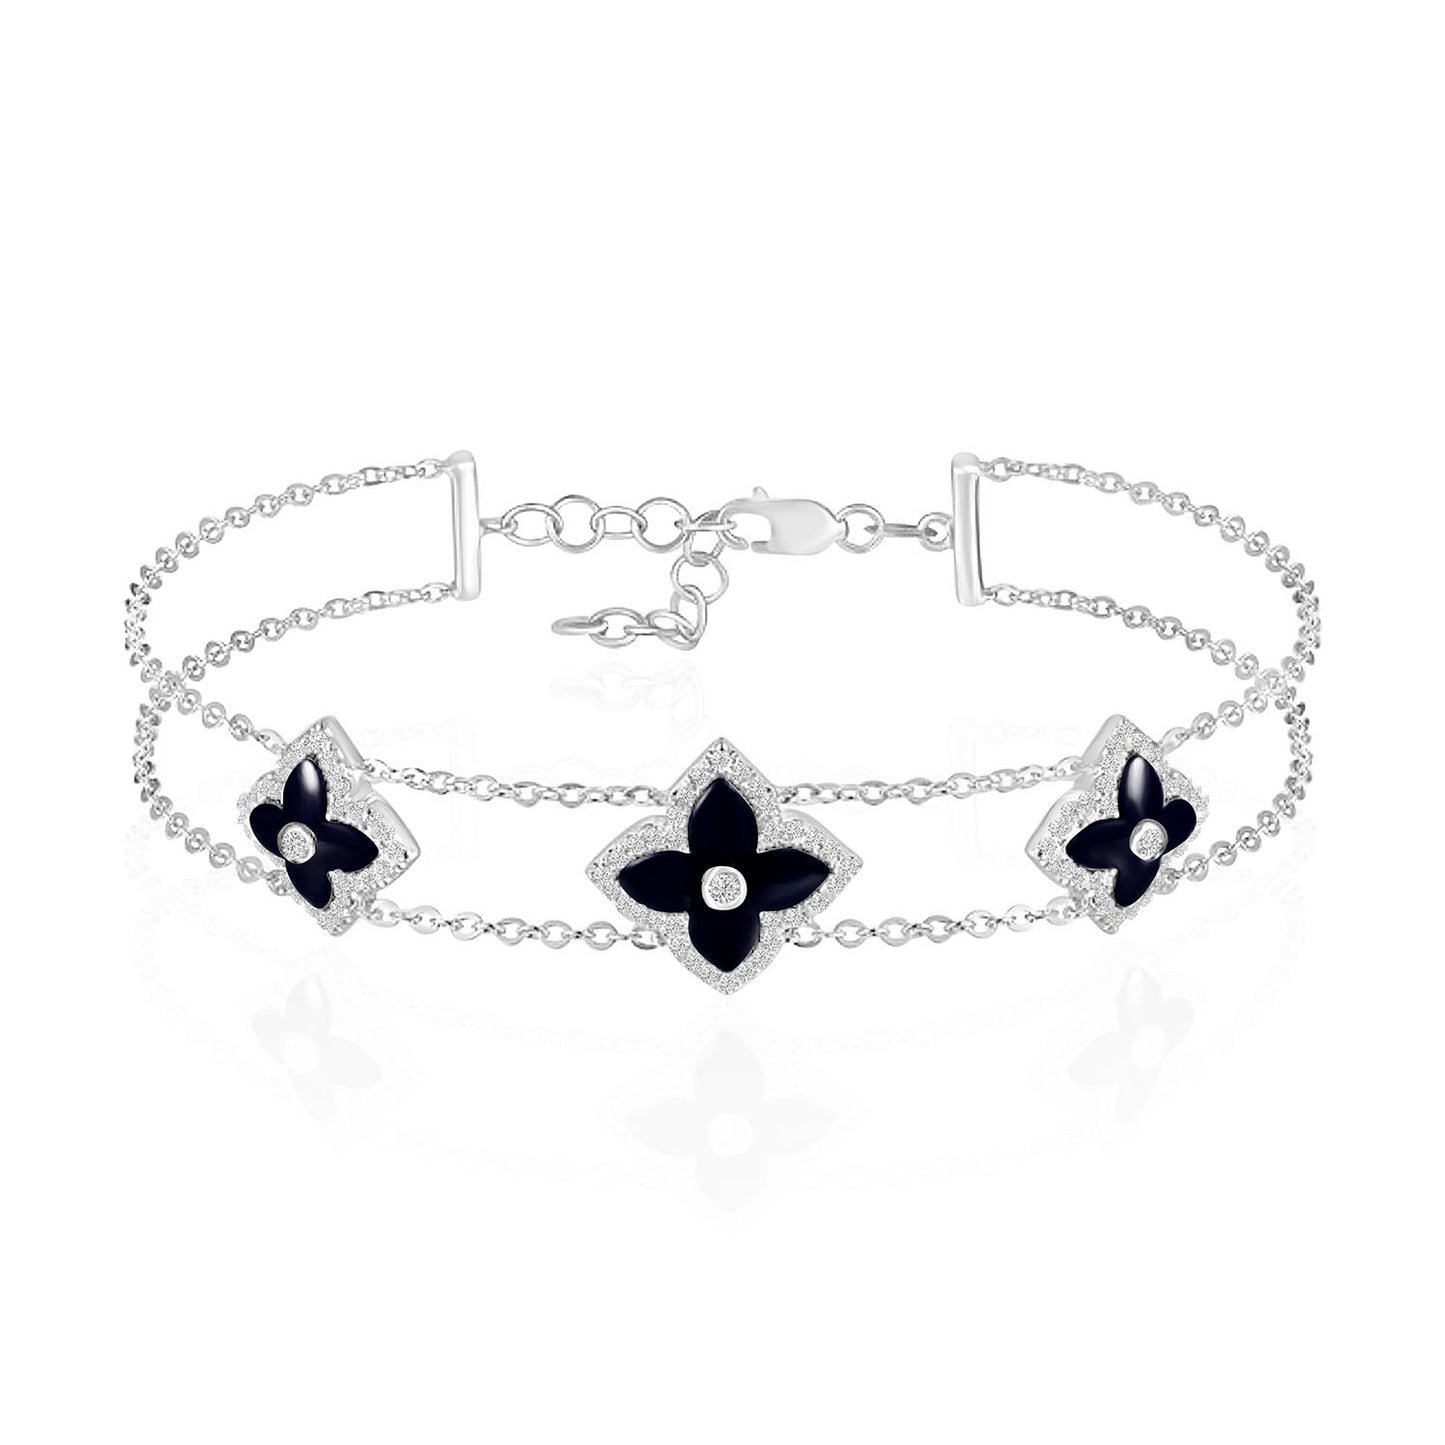 Luvente White Gold Black Onyx And Diamond Flower Bracelet